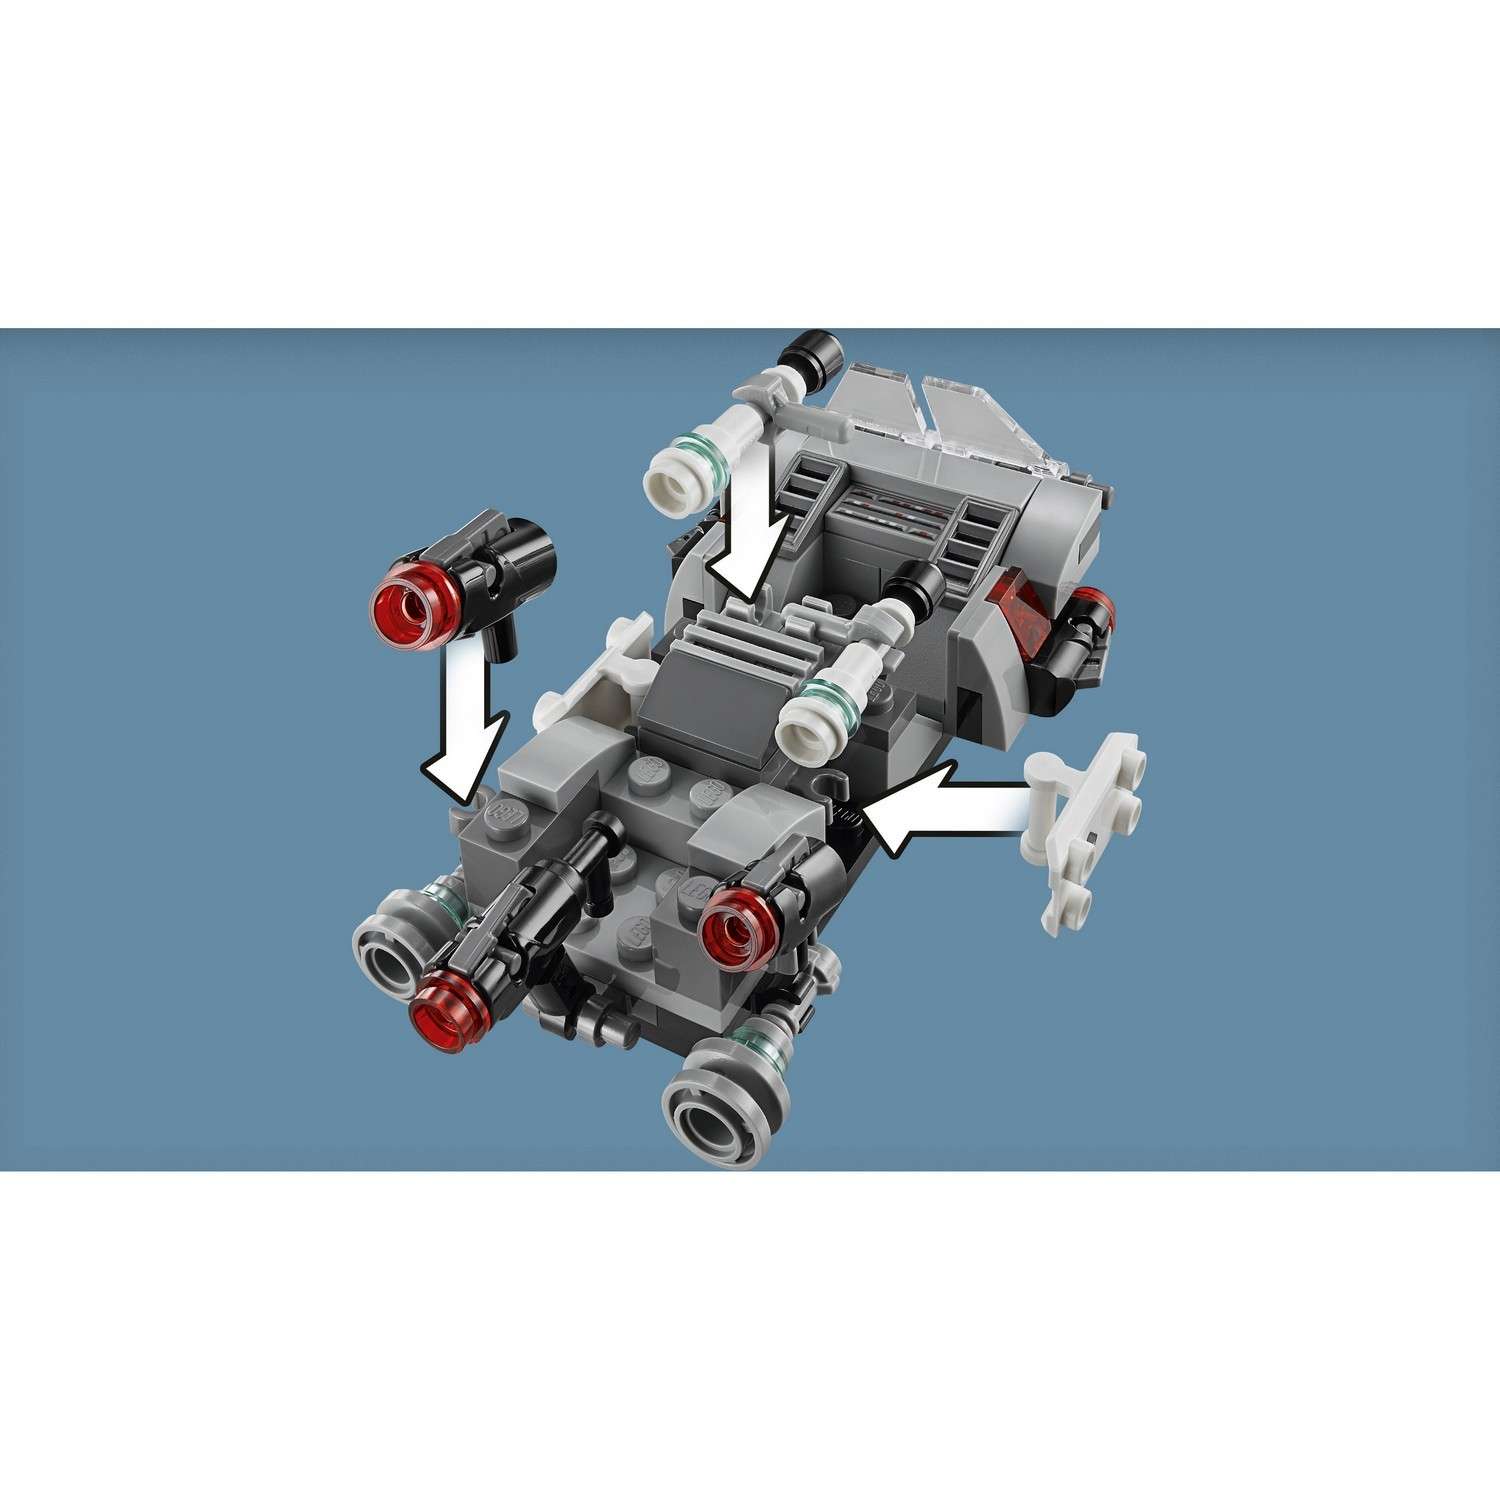 Конструктор LEGO Star Wars TM Спидер Первого ордена (75166) - фото 6